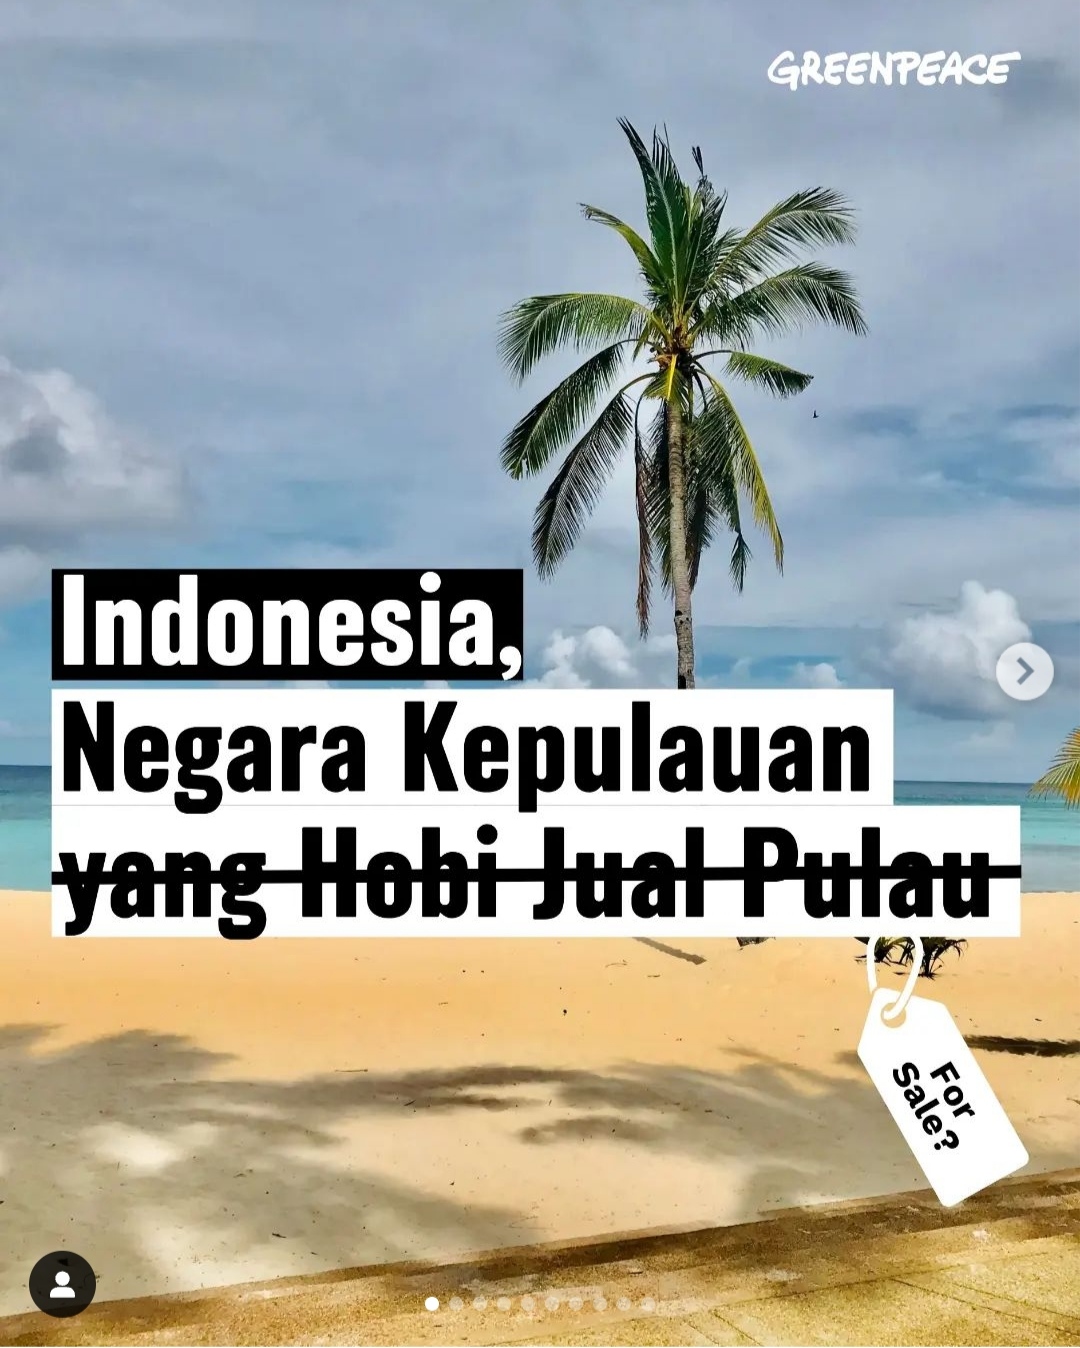 Pulau-pulau Indah di Indonesia dijual, Greenpeace Buat Sarkas?